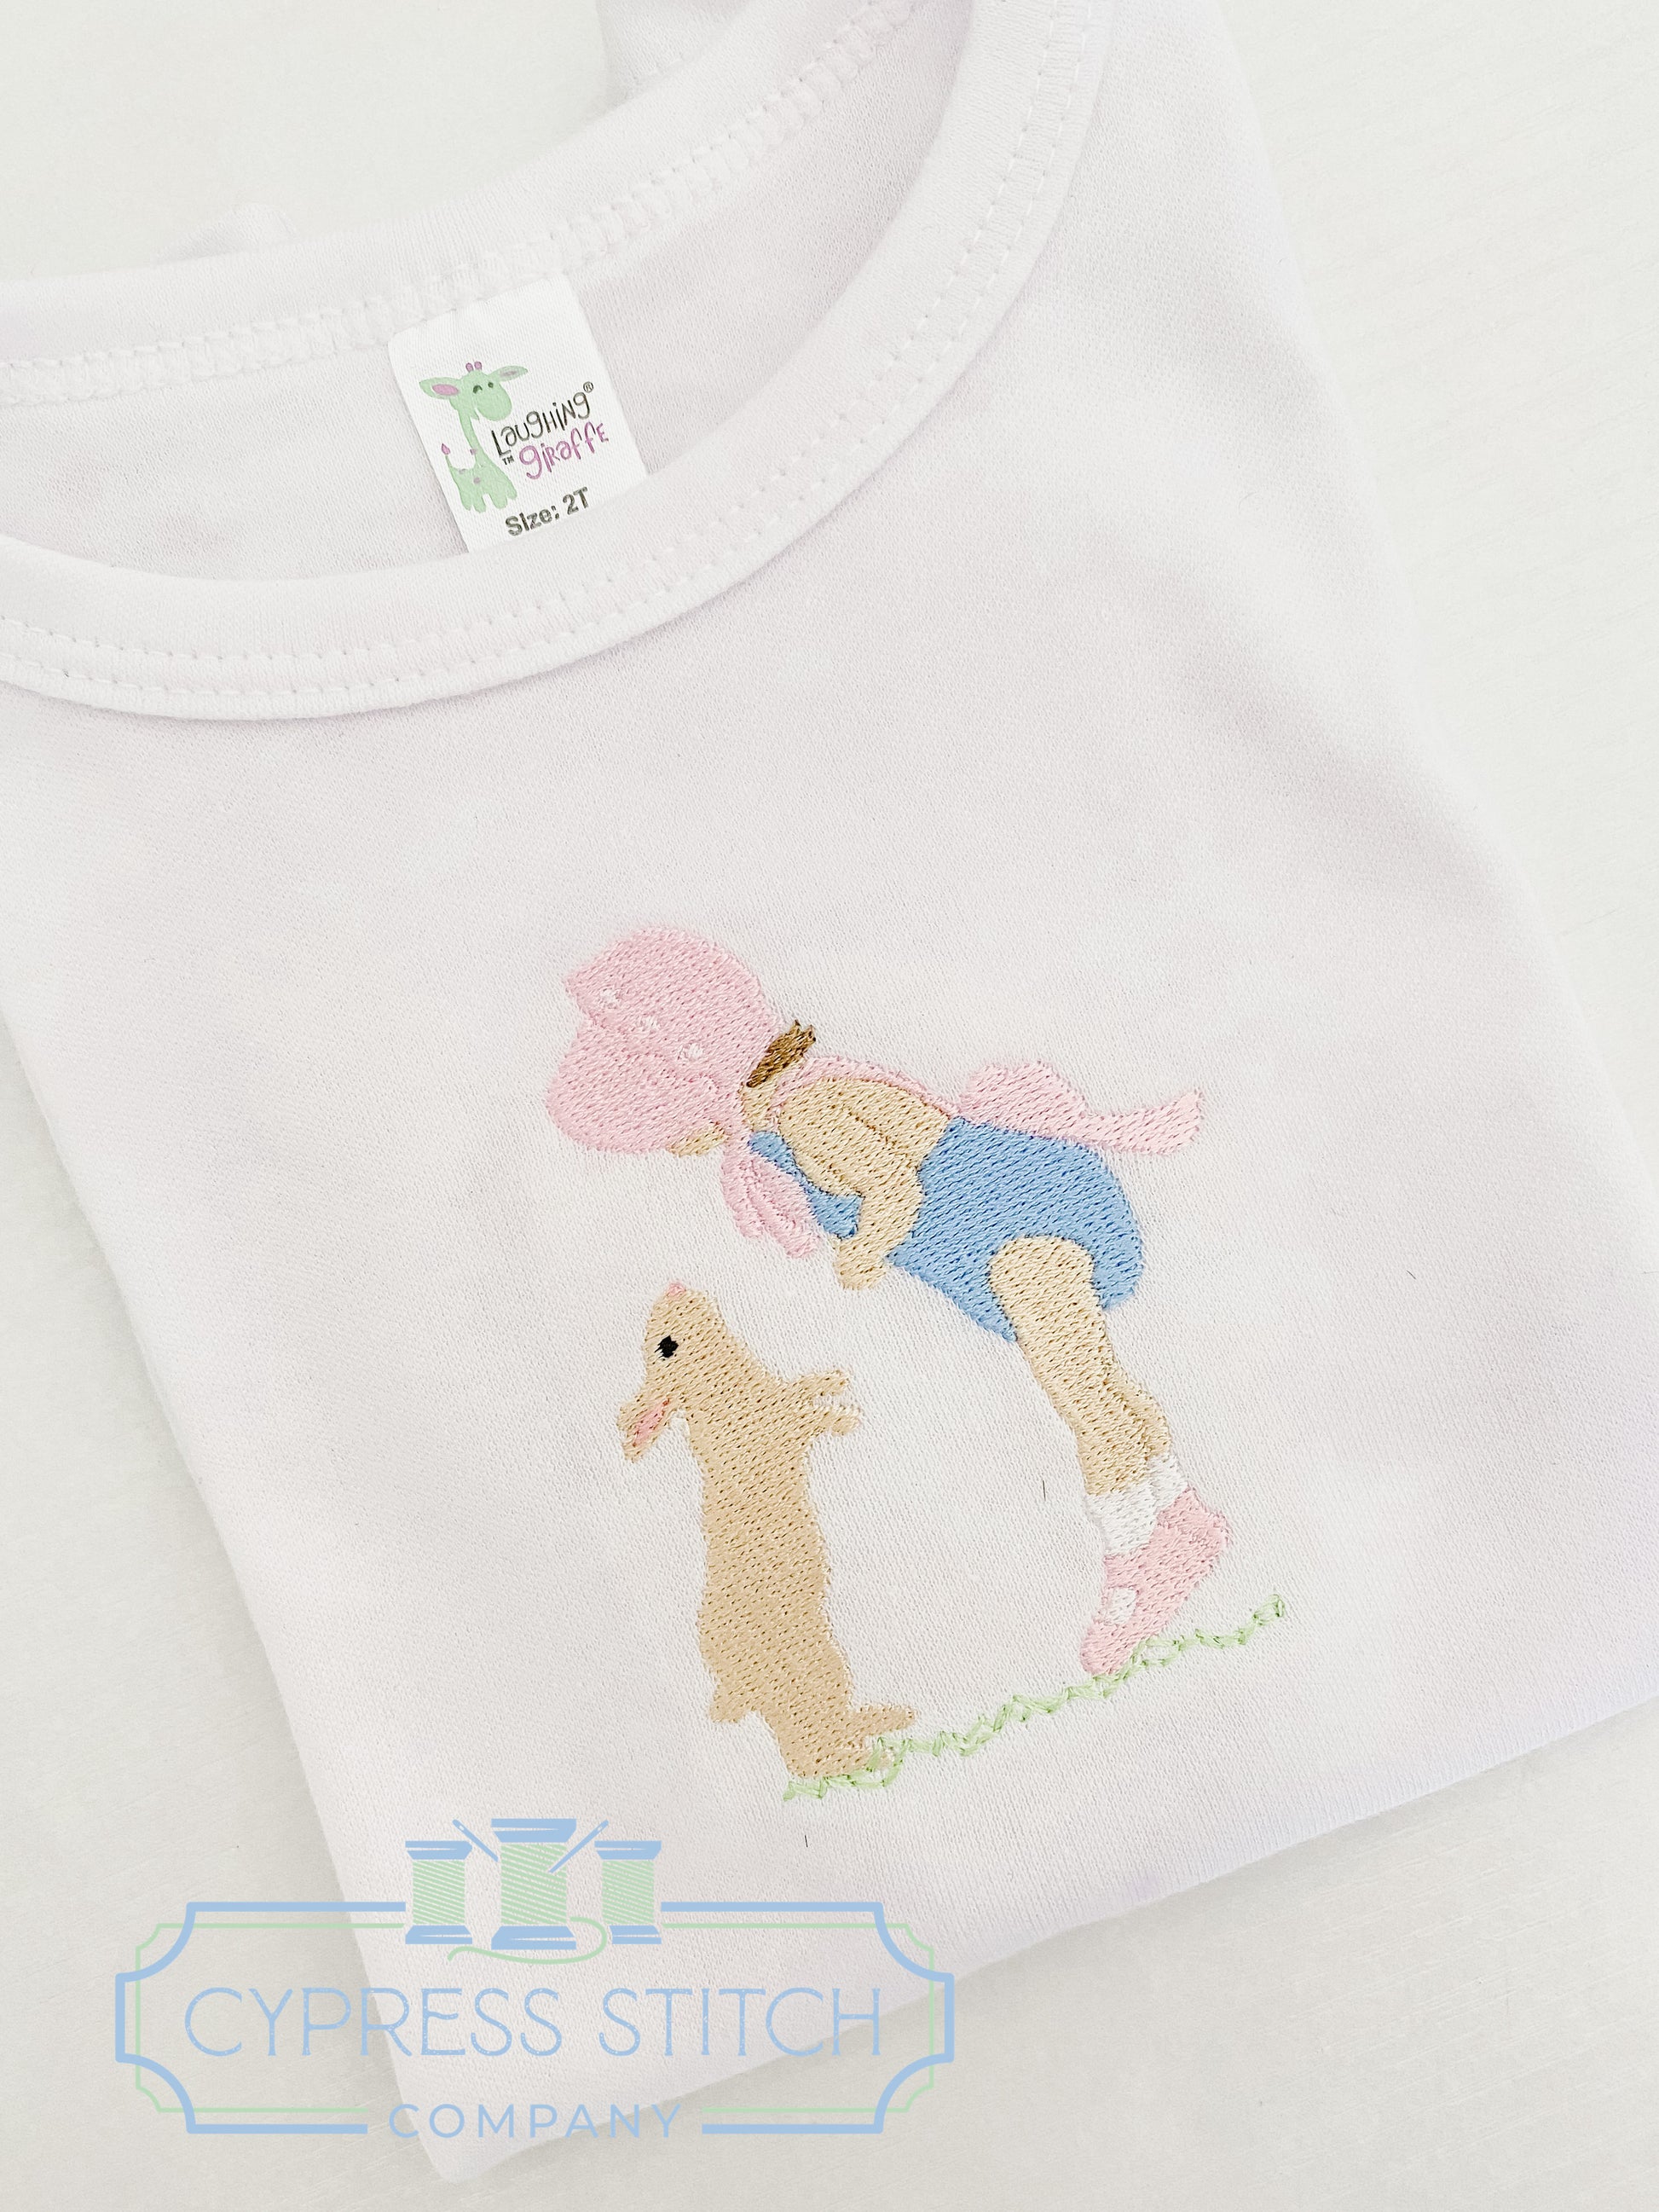 Bonnet Girl Easter Bunny Shirt - Cypress Stitch Company